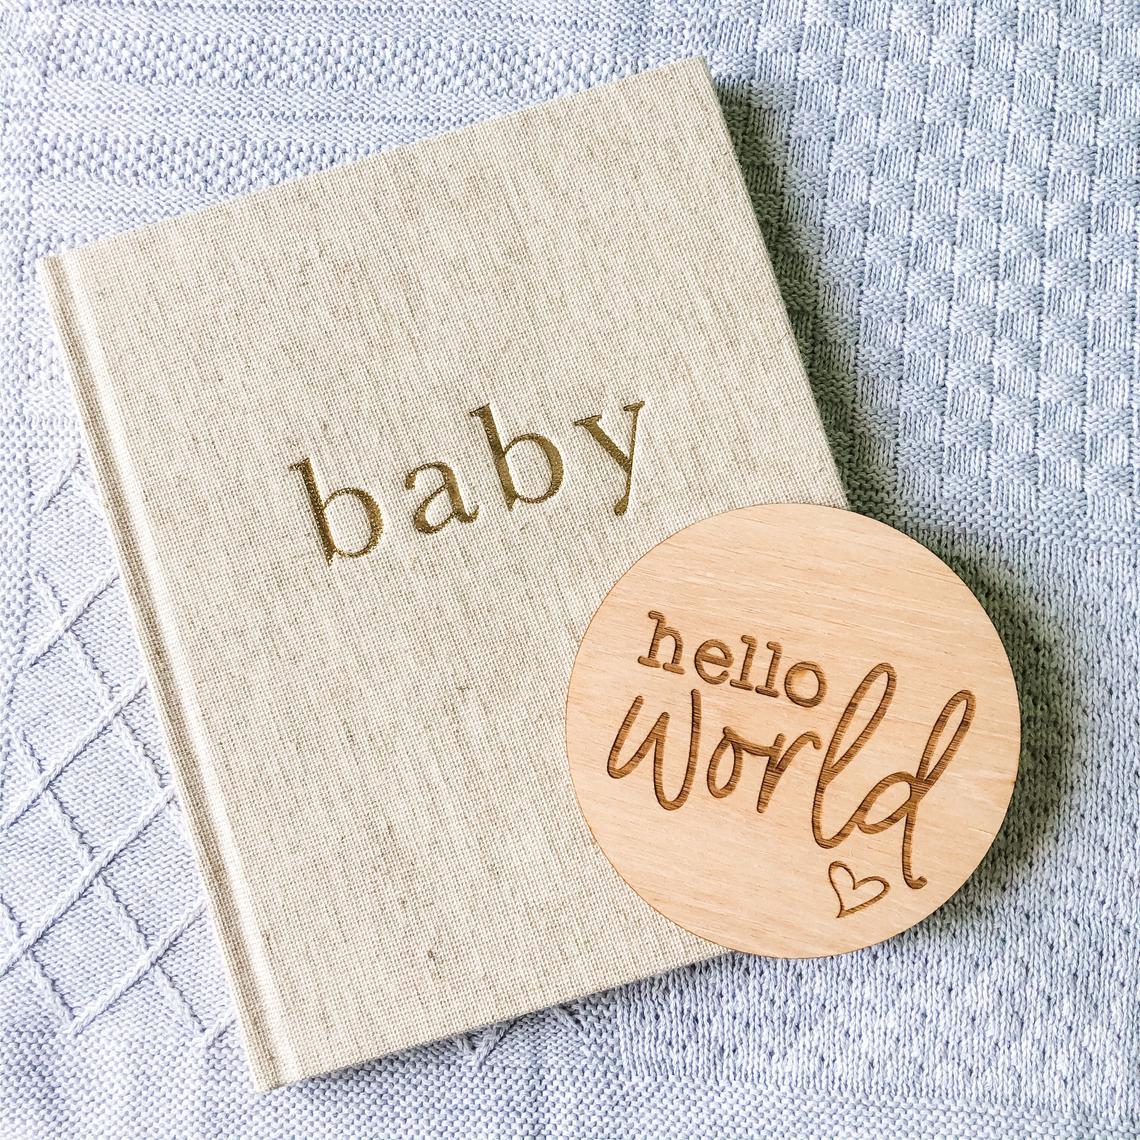 Hello World Baby Announcement Sign Heart Design (New Baby Arrival, Newborn Photo Prop)